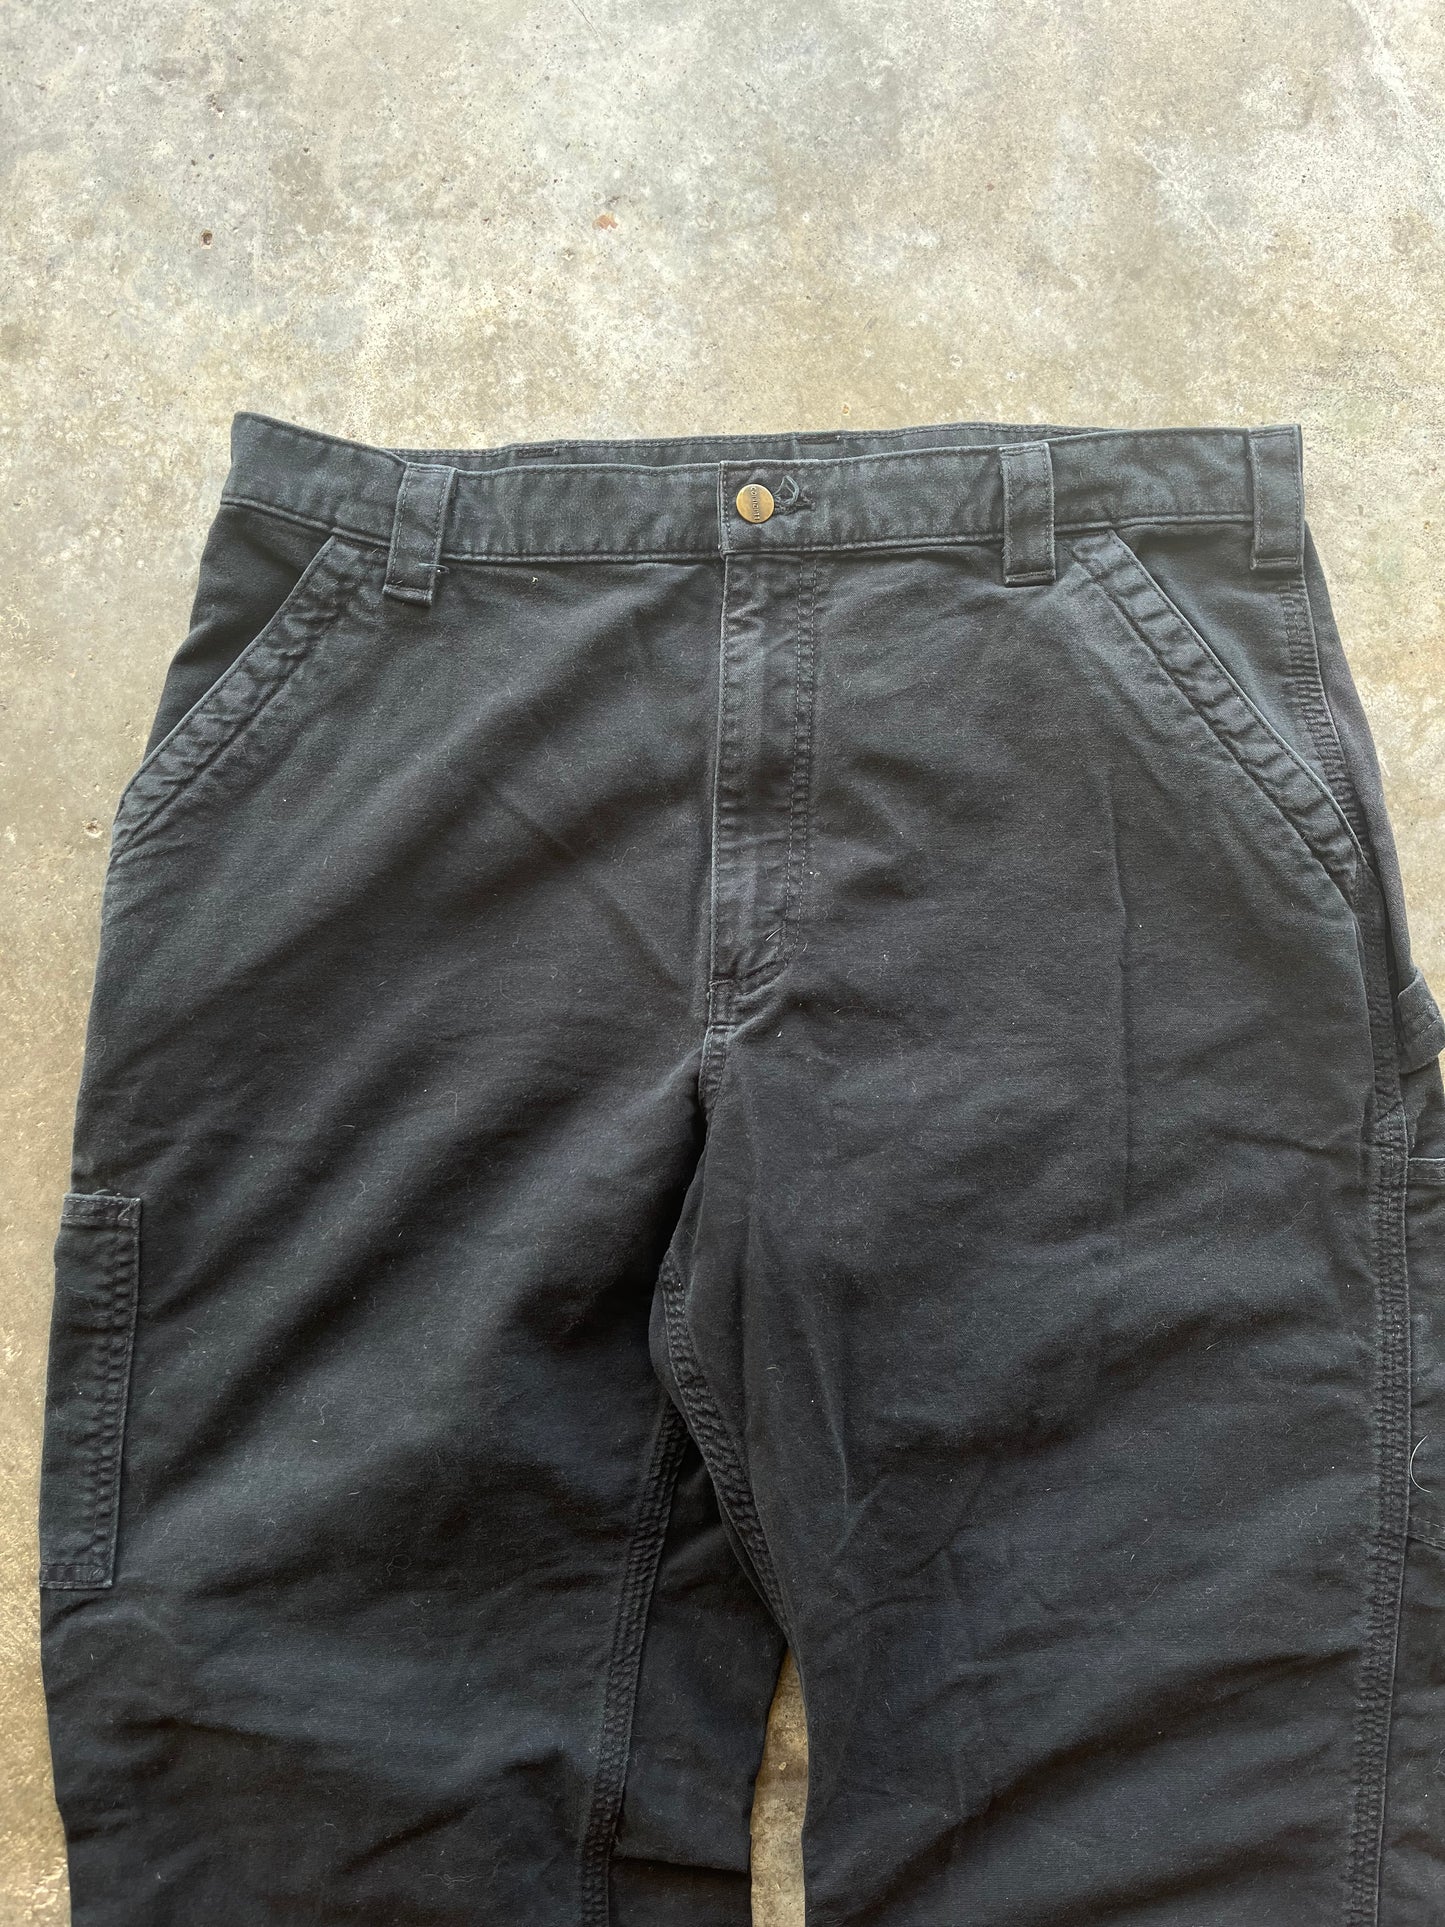 (38 x 30) Carhartt Original Fit Pants